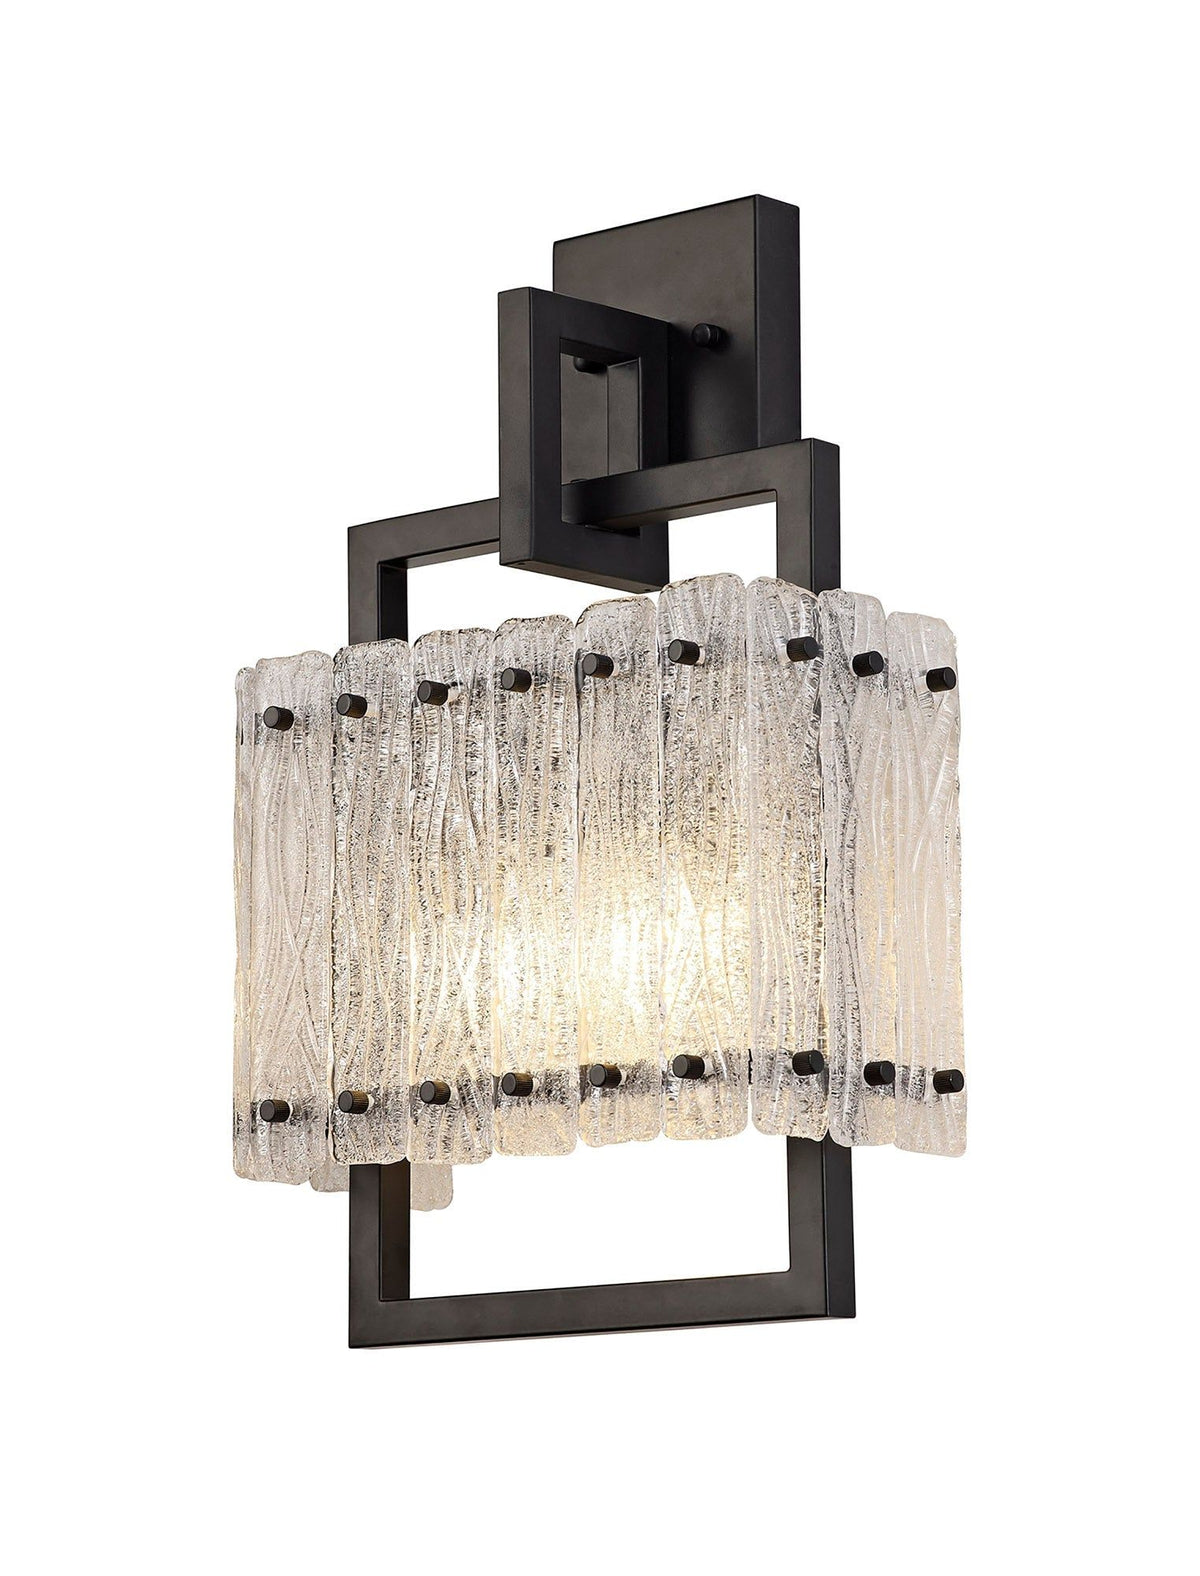 Vimonia Wall Lamp, 2 Light E27, Matt Black/Crystal Sand Glass